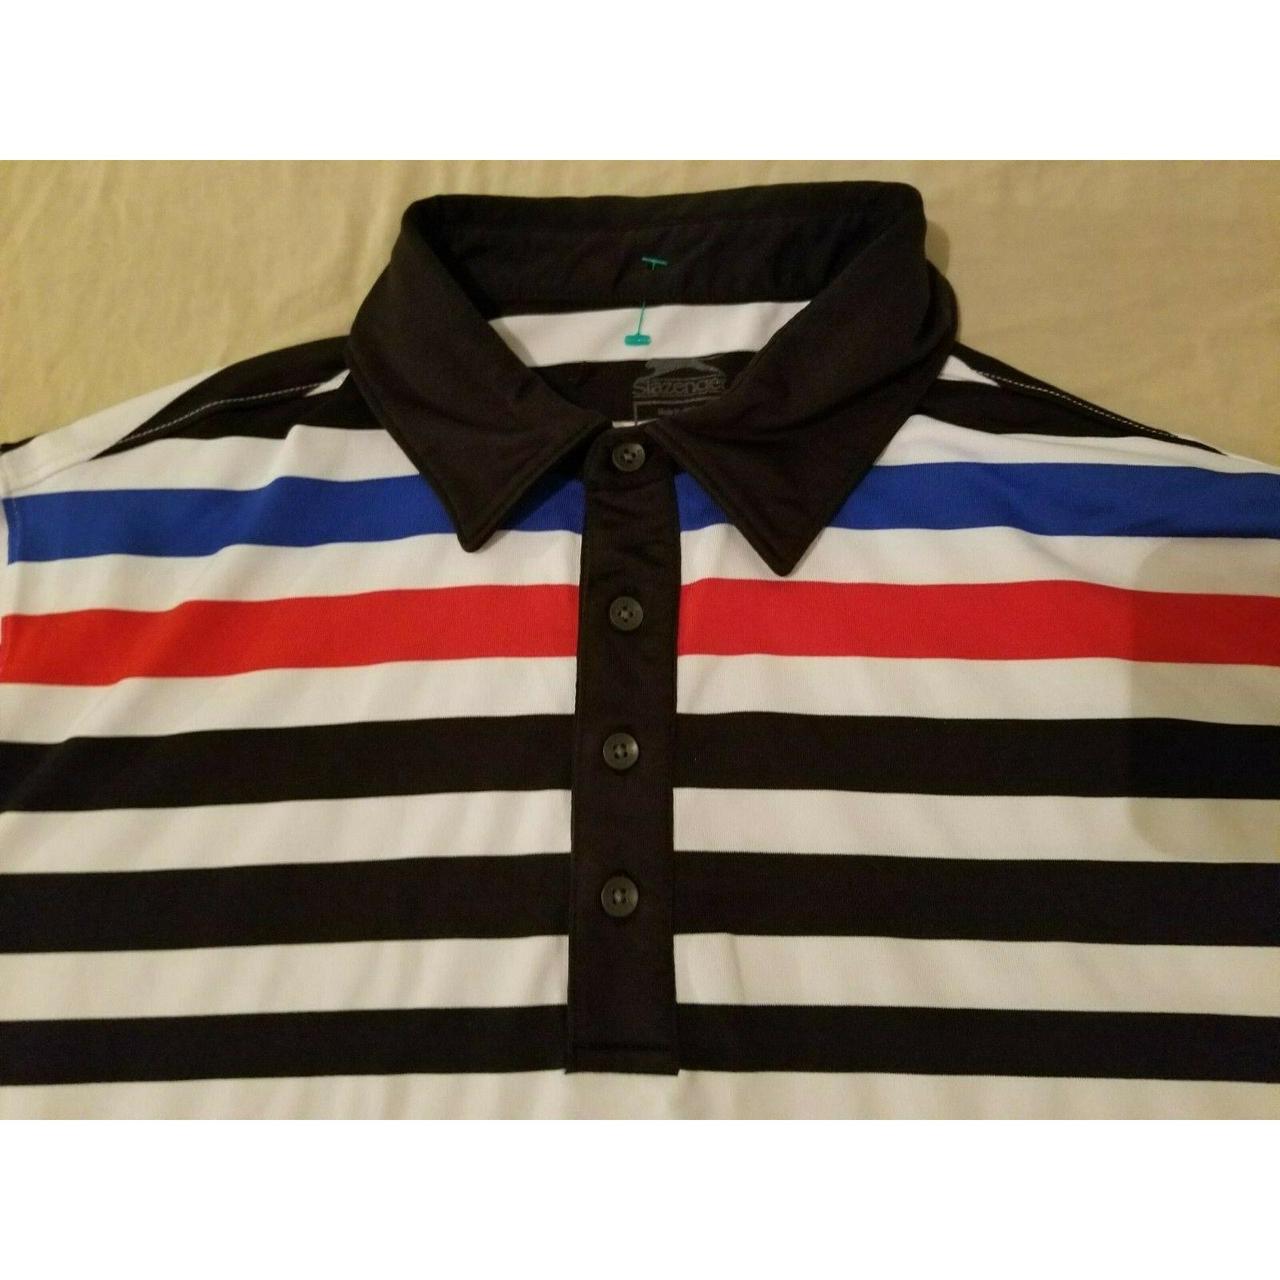 Product Image 1 - Mens Slazenger Polo Shirt L